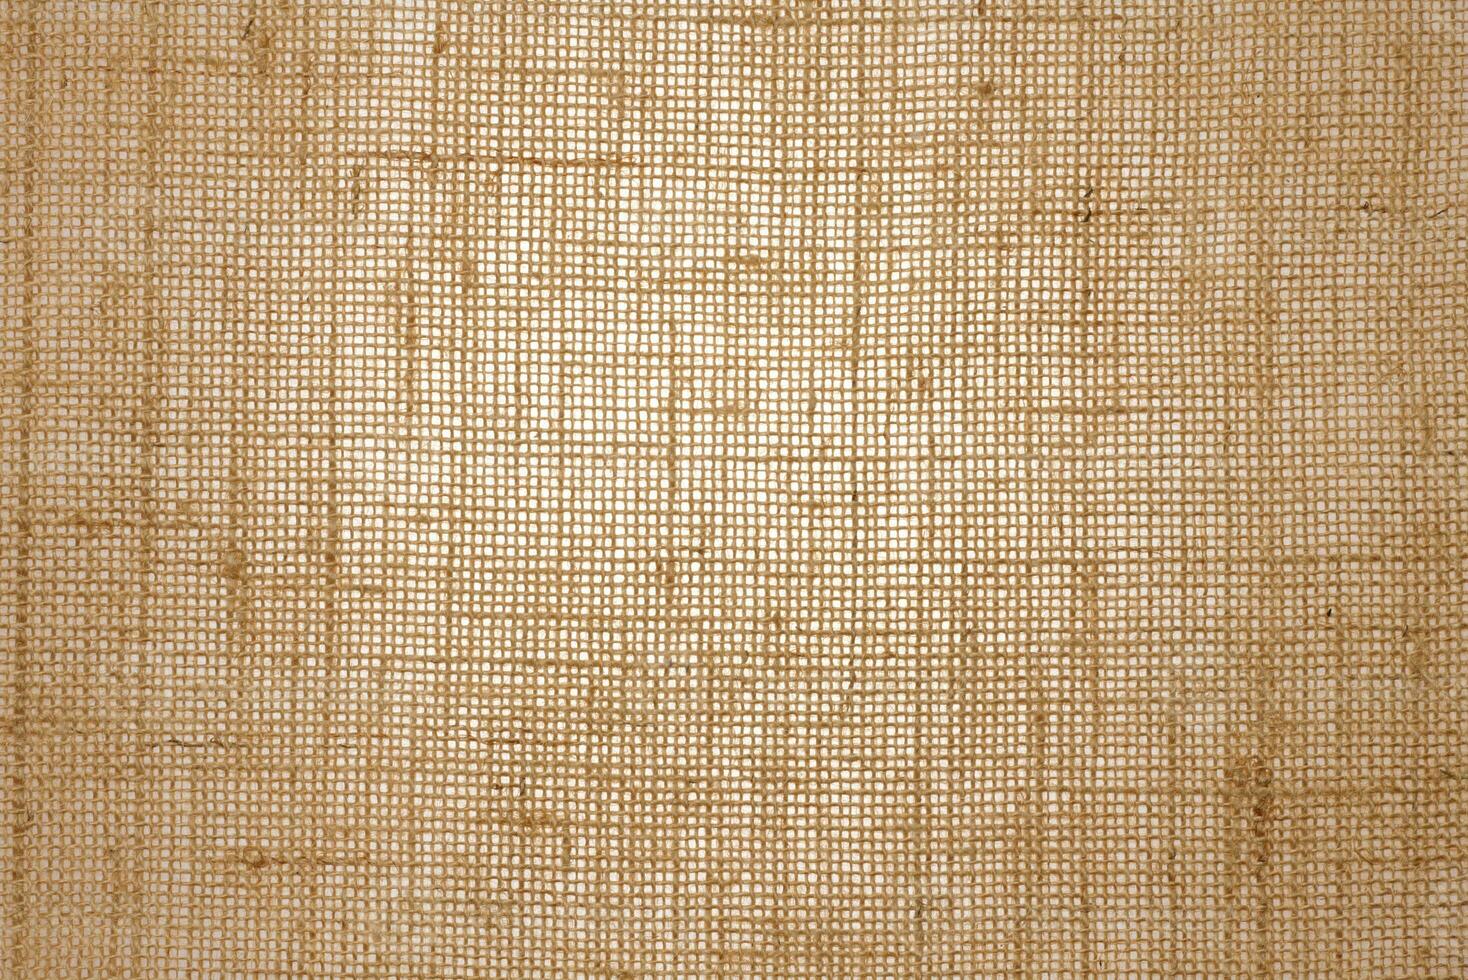 Brown burlap texture, full frame photo